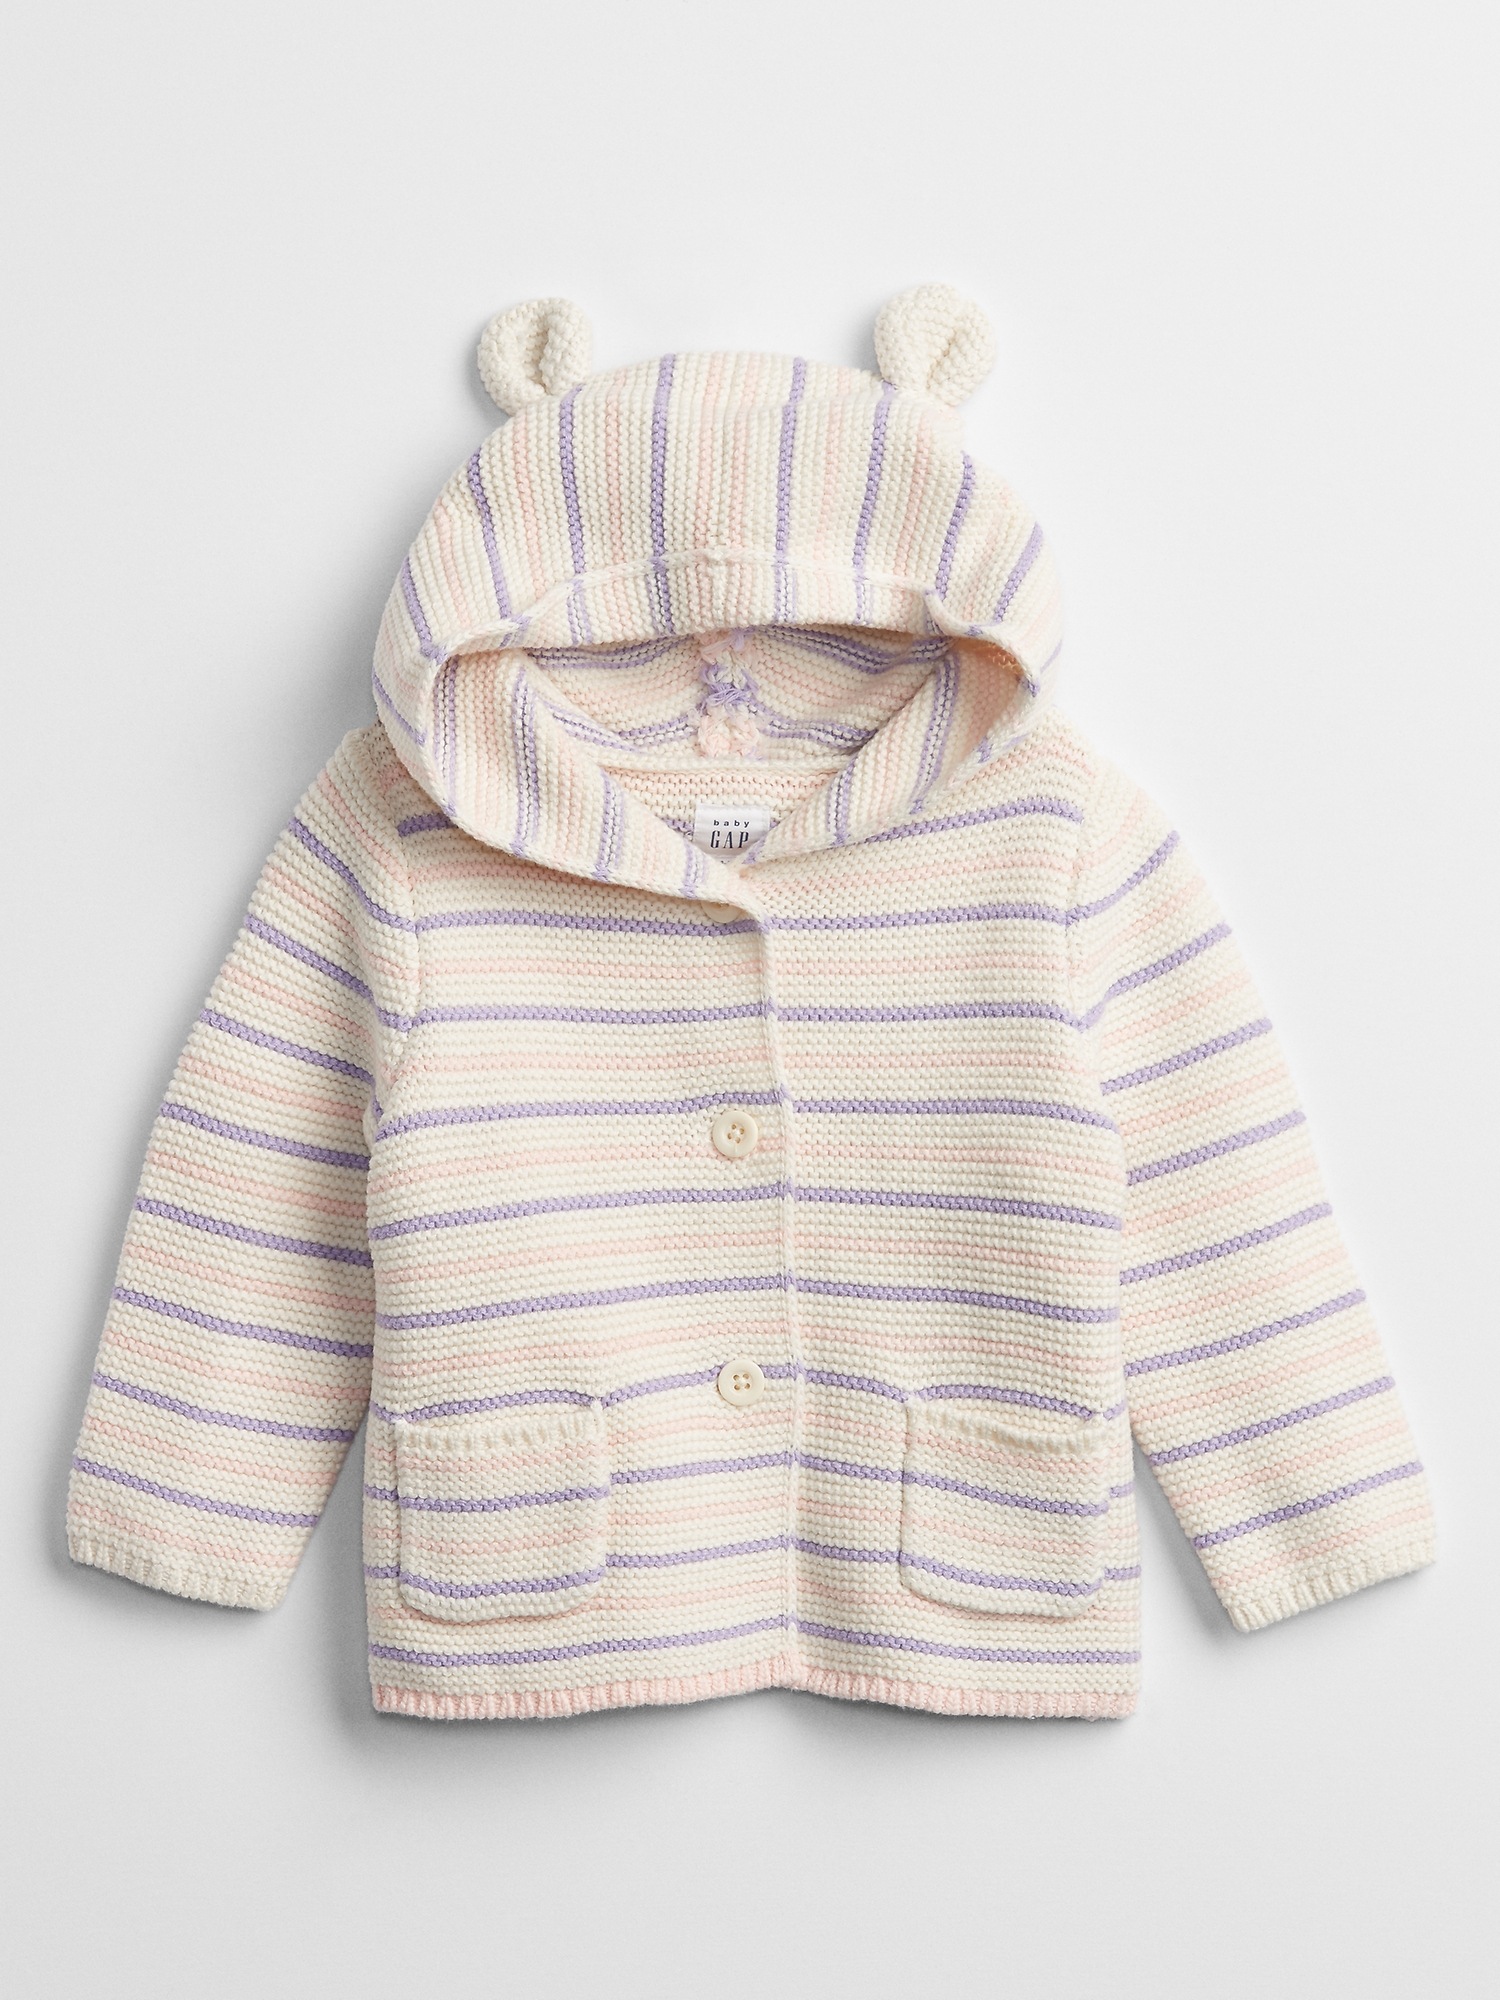 Baby Stripe Sweater | Gap Factory